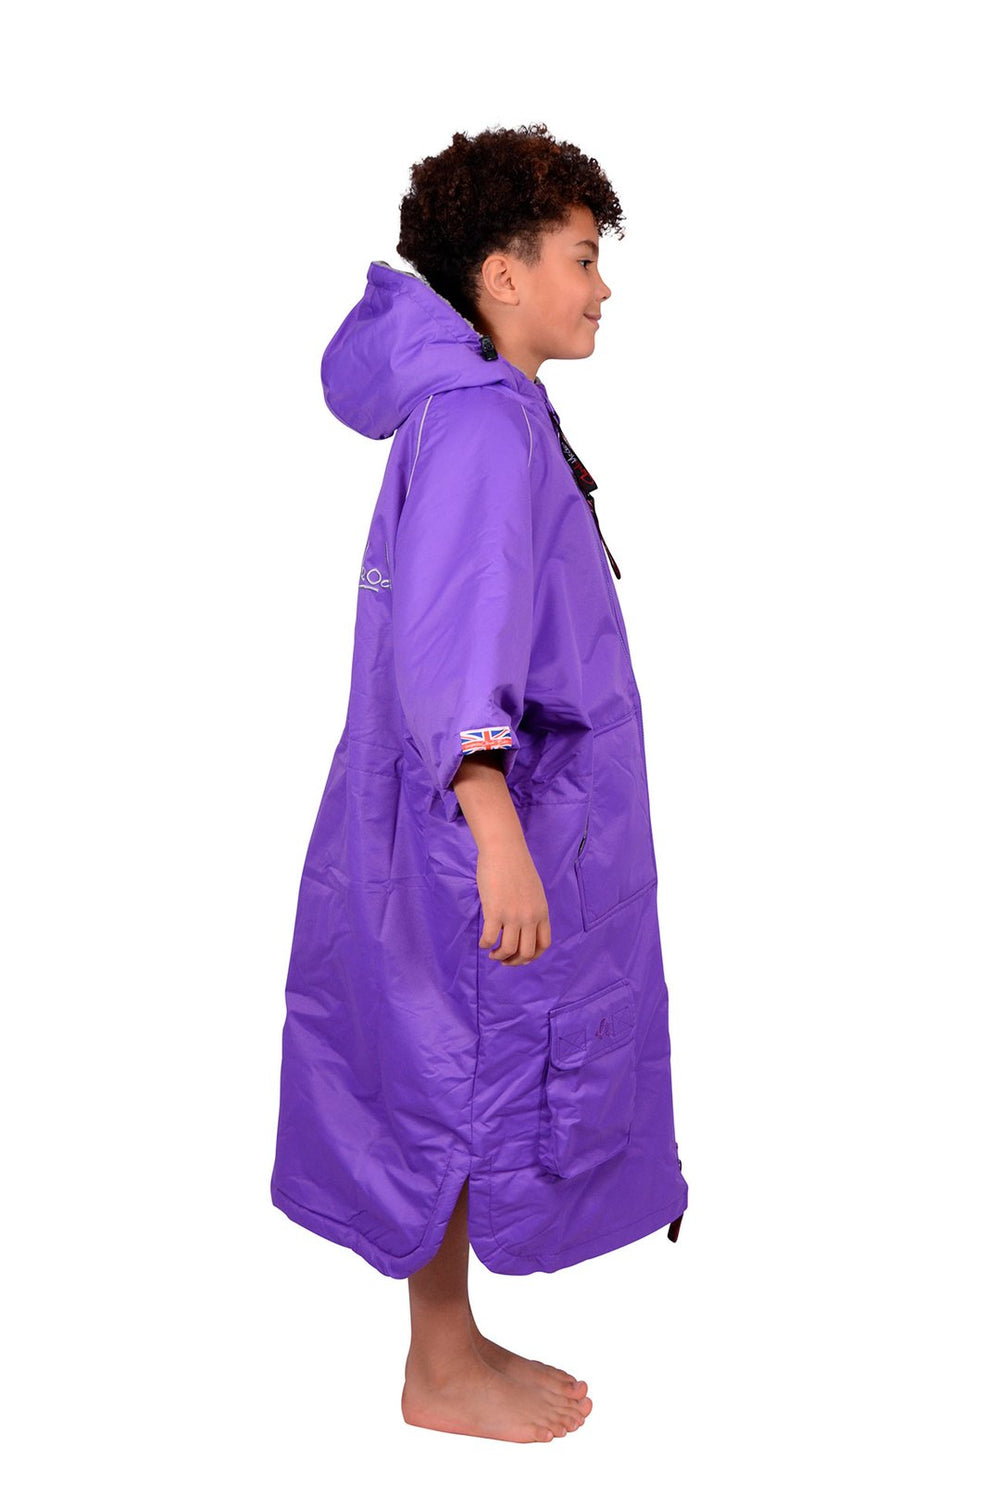 Charlie McLeod - Eco Short Sleeve Changing Robe - Purple/ Grey - Kids